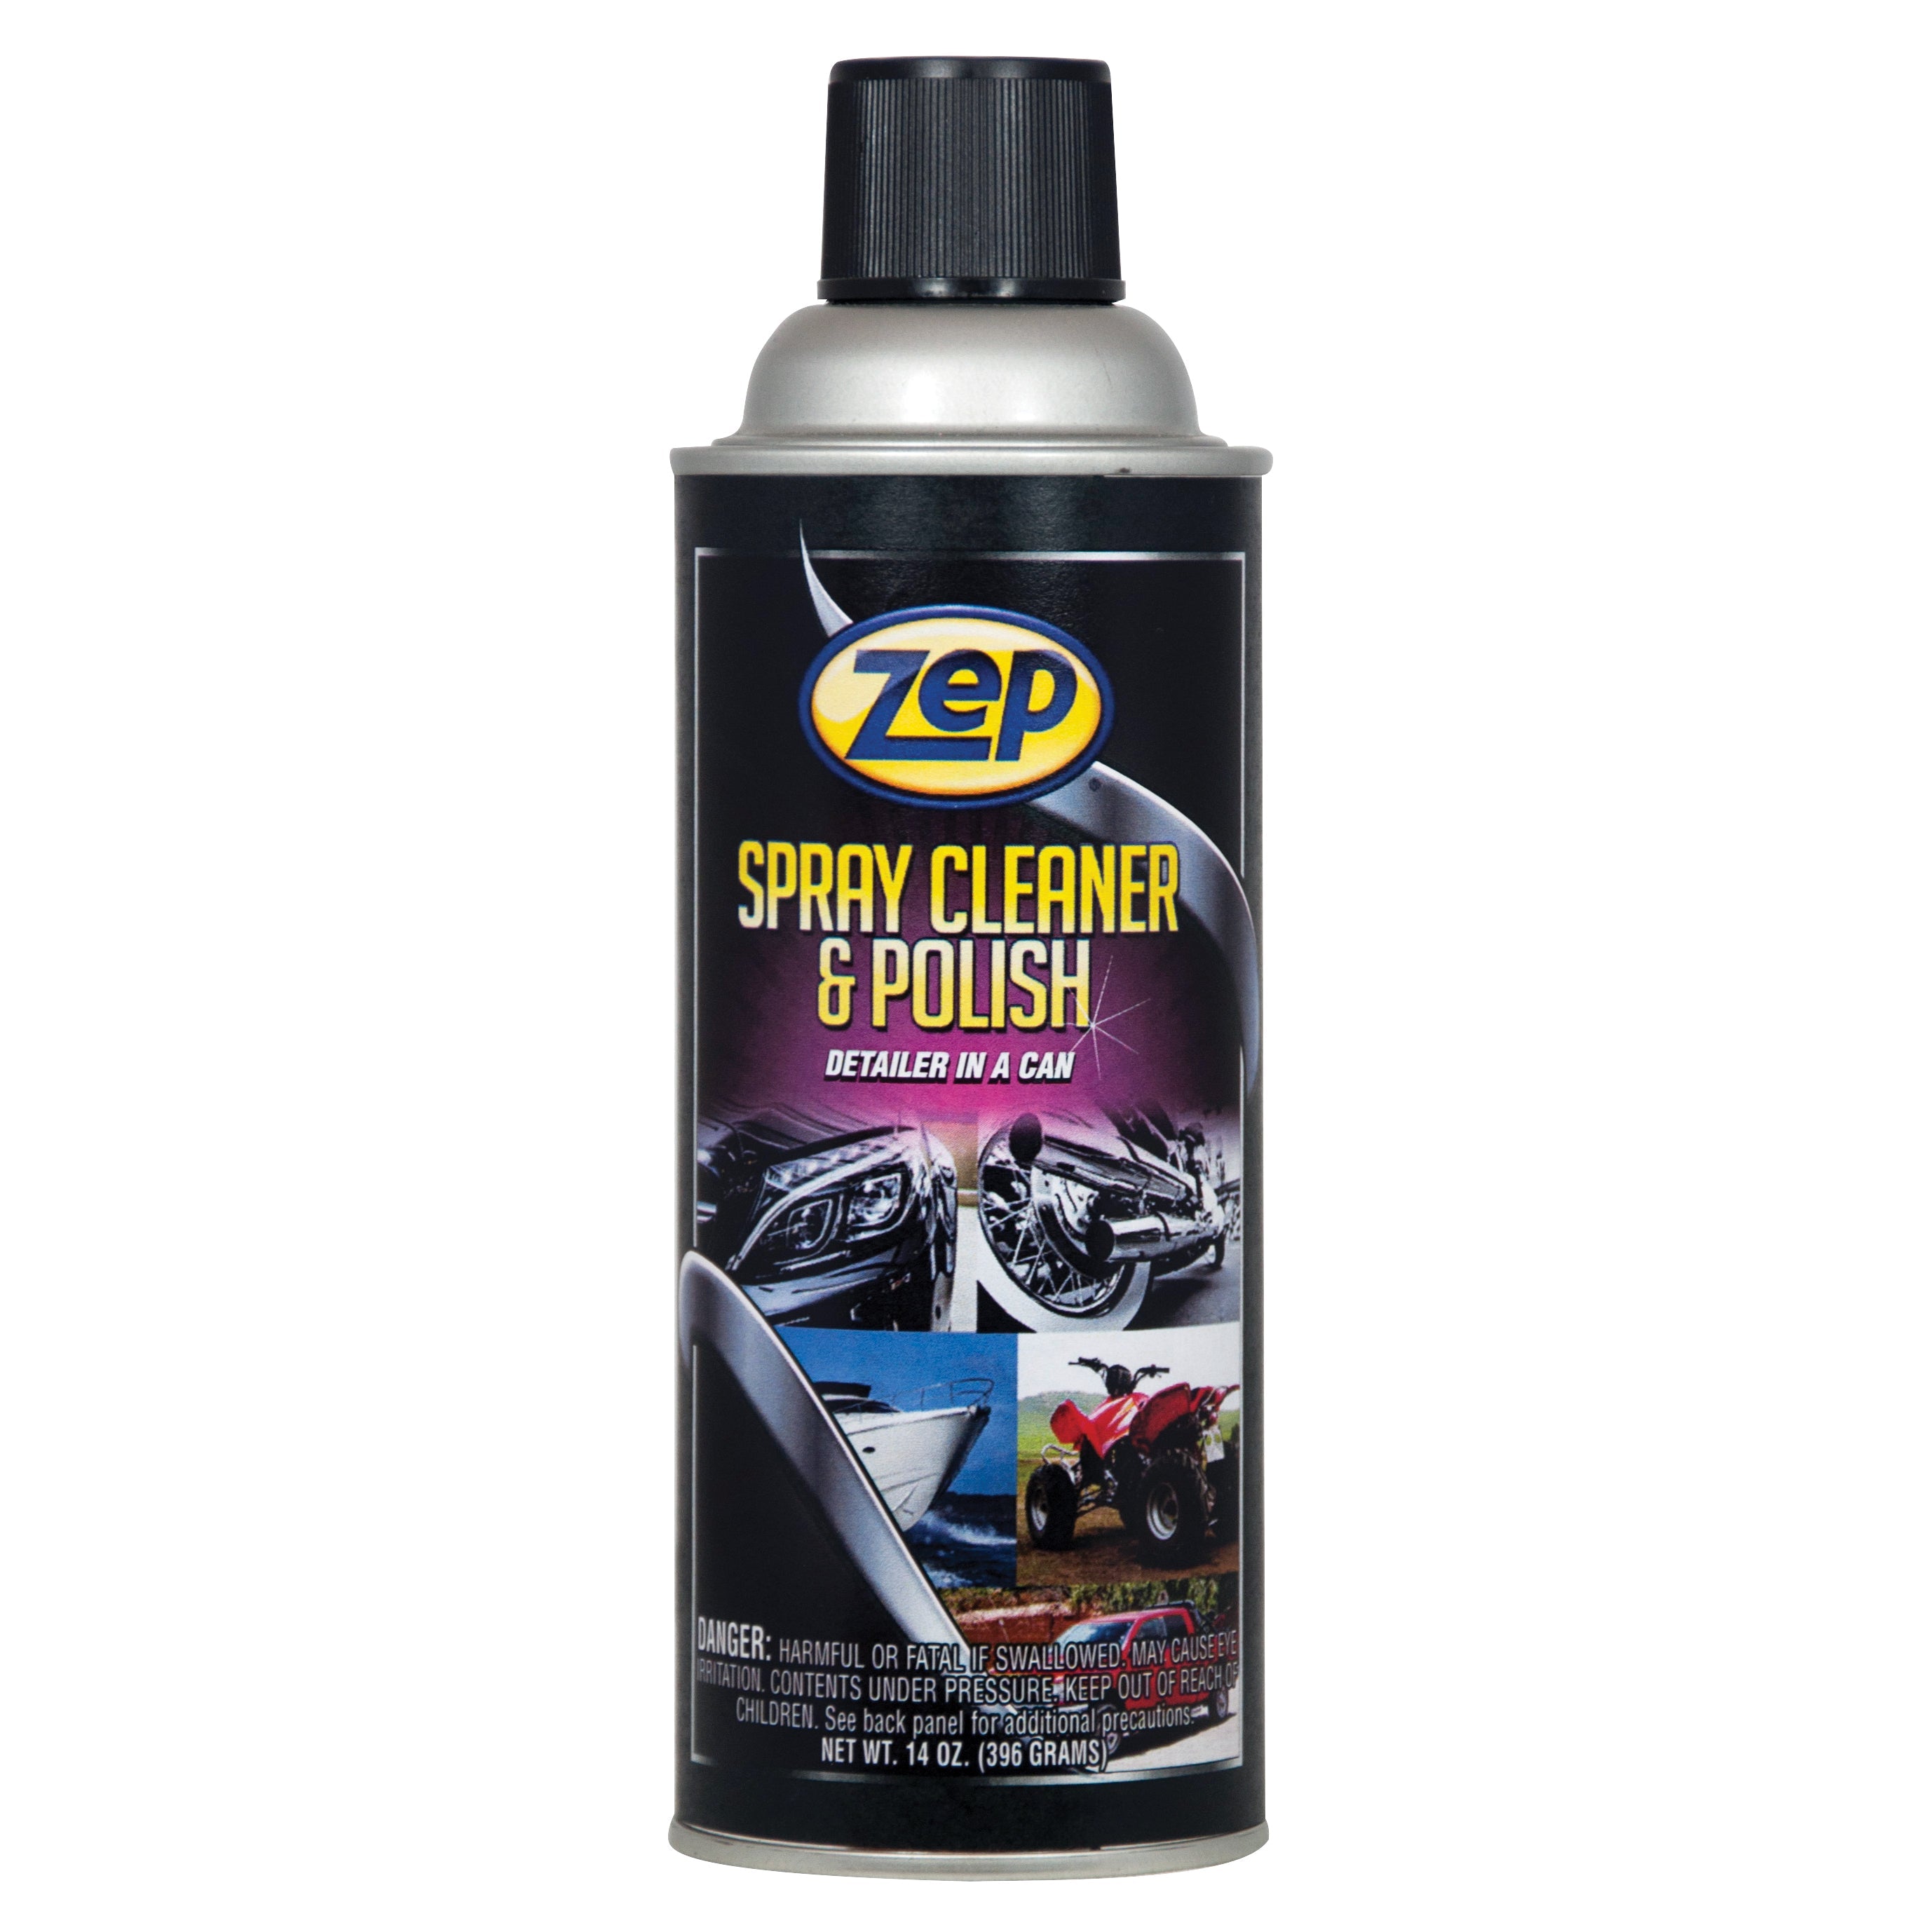 Spray Cleaner & Polish